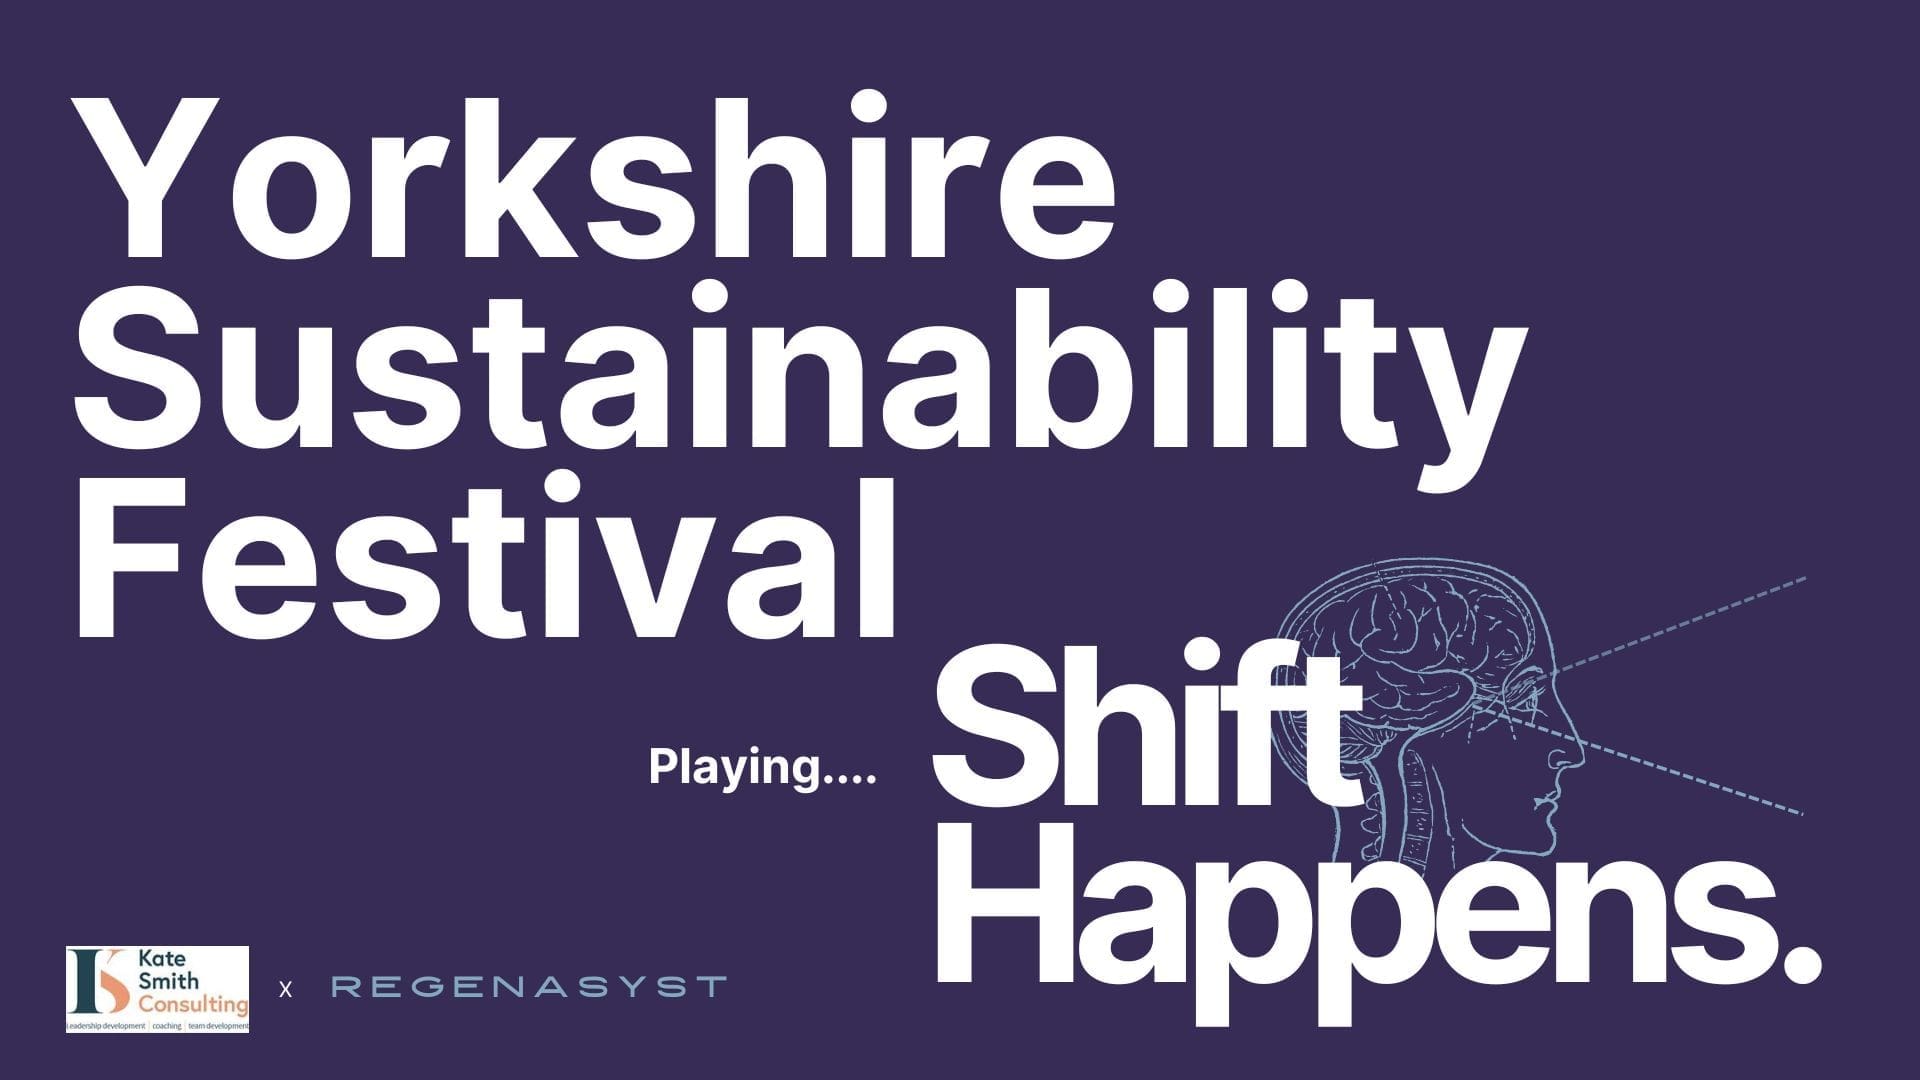 (alt="Yorkshire Sustainability Festival playing Shift Happens")